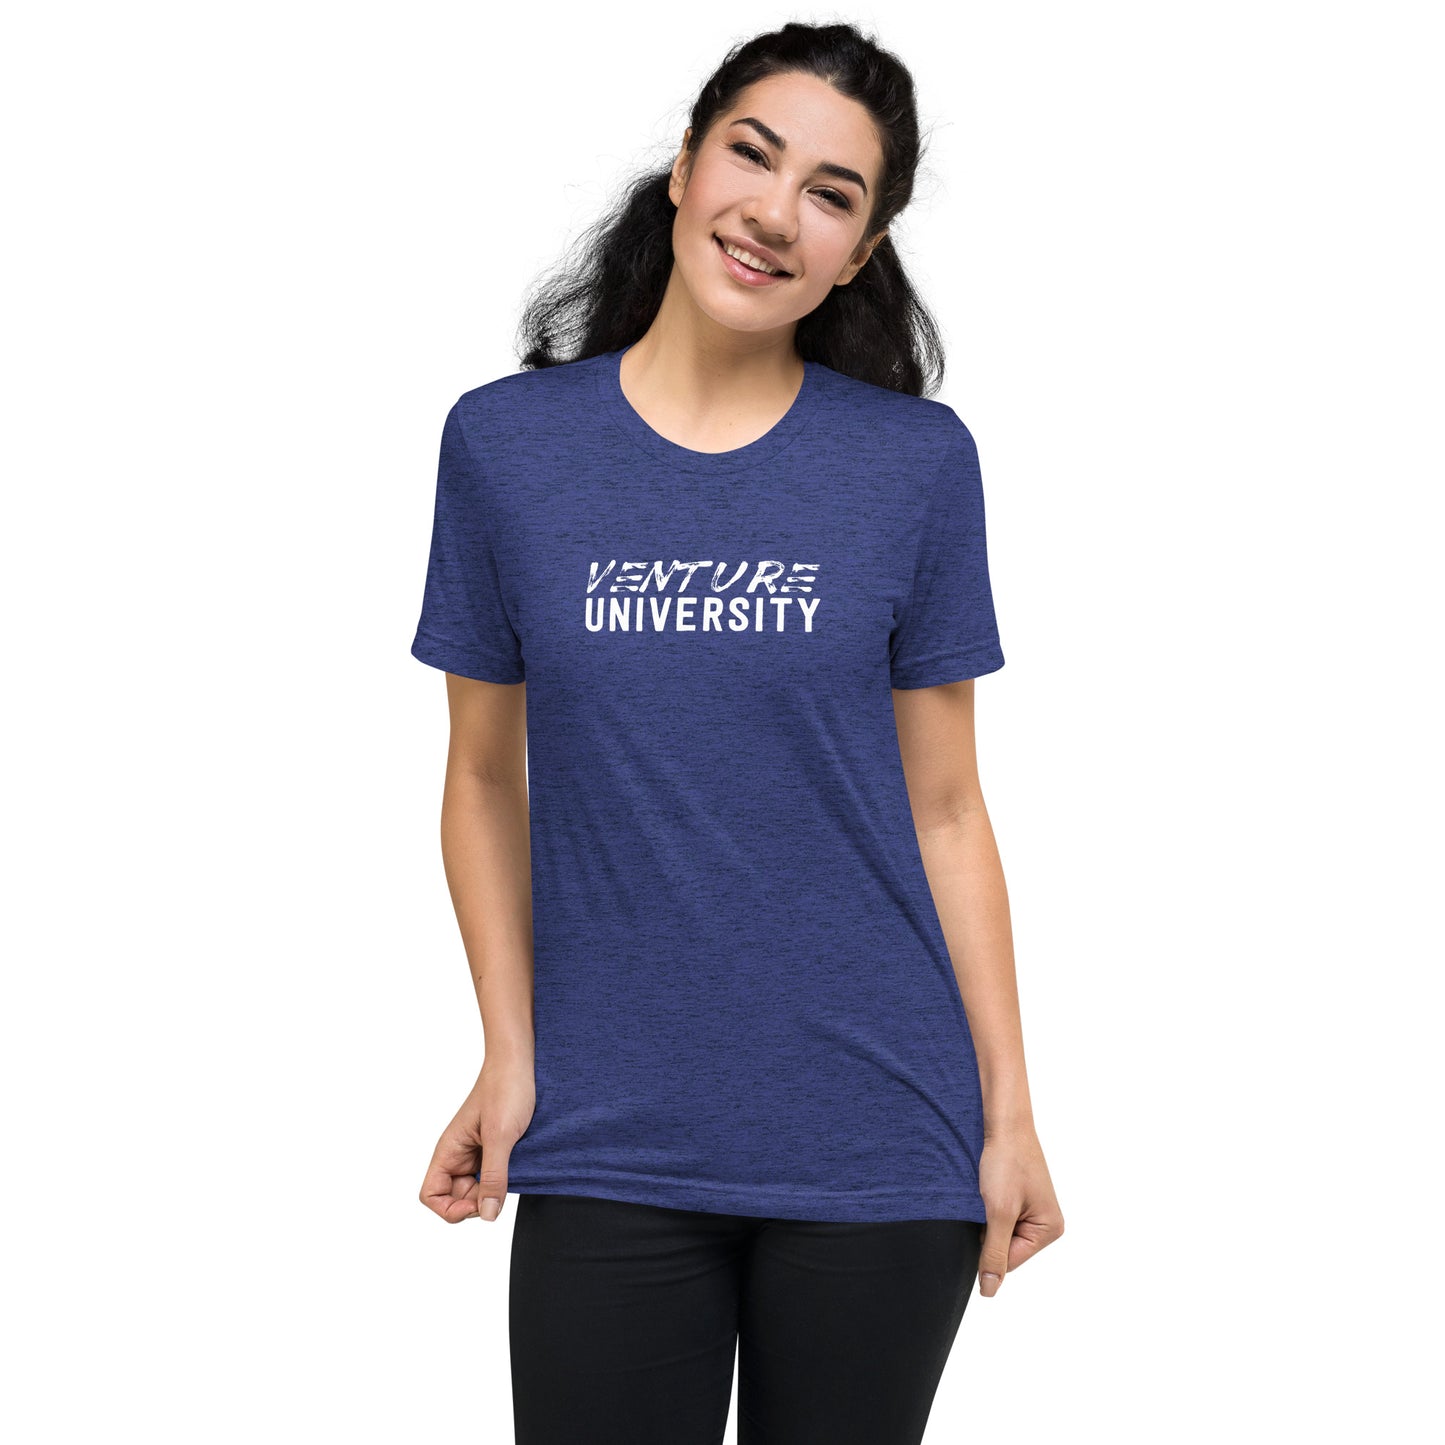 Venture University Unisex T-shirt (Extra Soft)